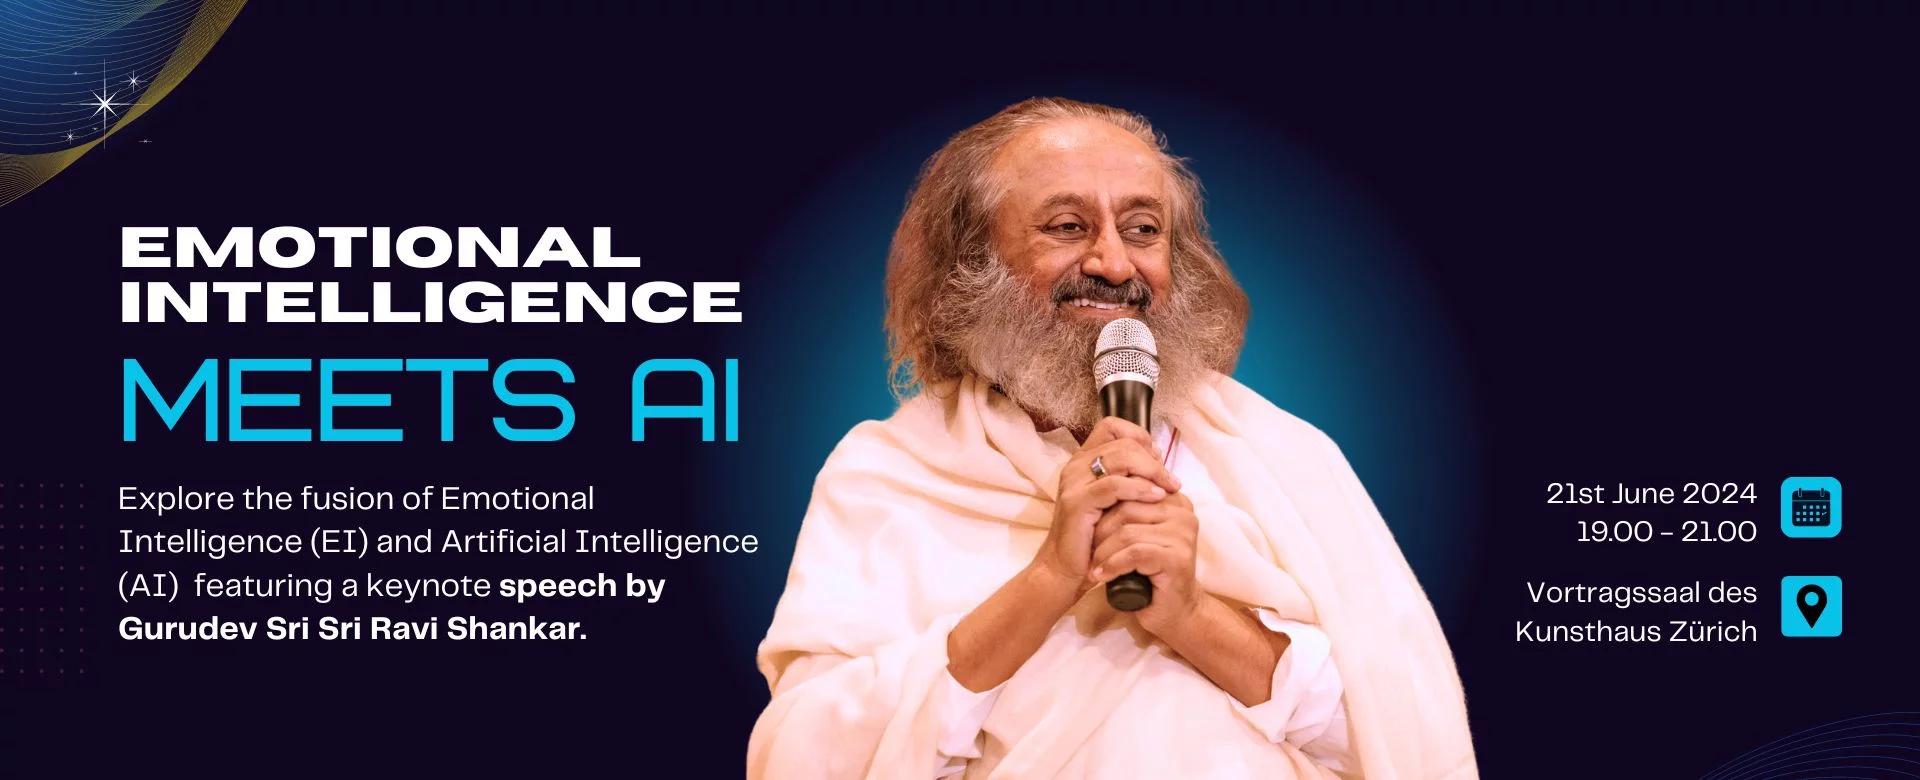 Explore the future of value-based education in an artificial intelligence (AI) -powered era, featuring a keynote speech & meditation by Gurudev Sri Sri Ravi Shankar.